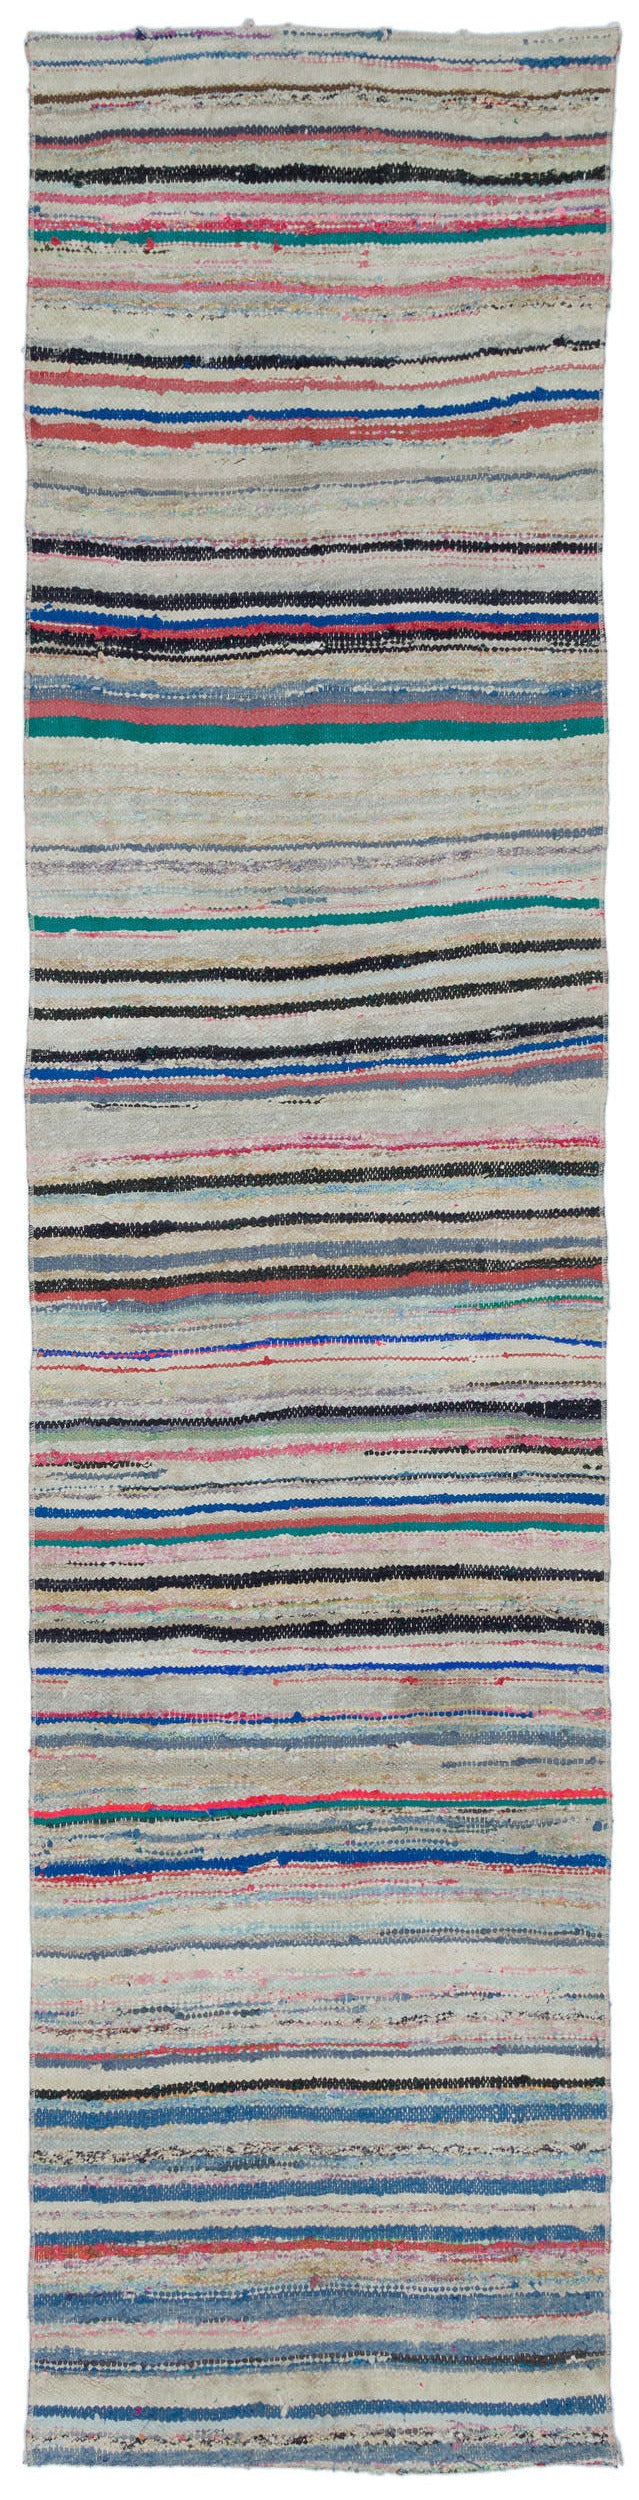 Cretan Beige Striped Wool Hand Woven Carpet 075 x 310